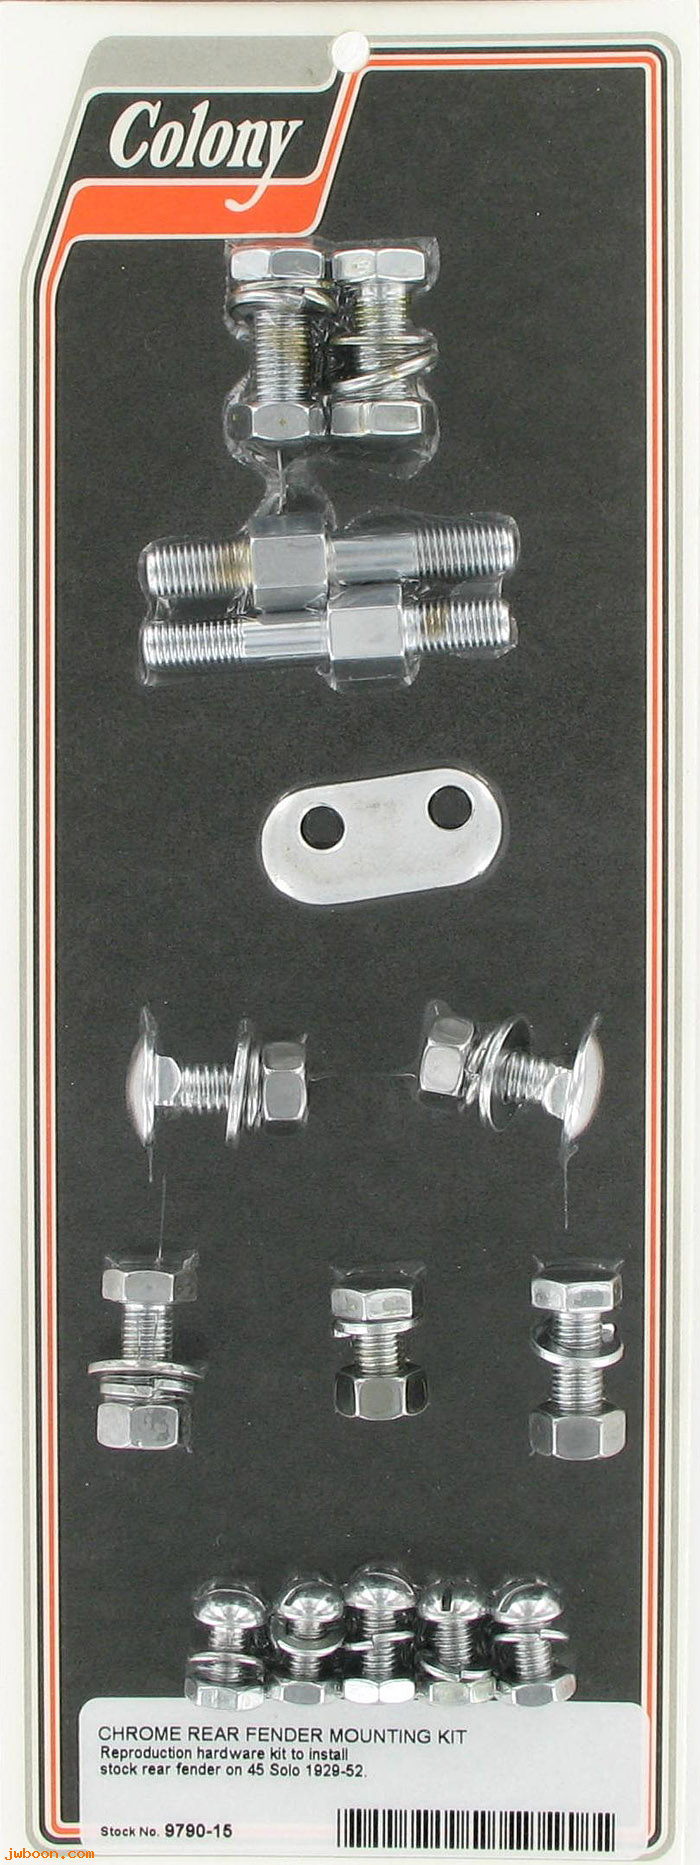 C 9790-15 (49180-36 / 66302-29): Rear fender mounting kit - 45 Flathead 750cc '29-'52, in stock